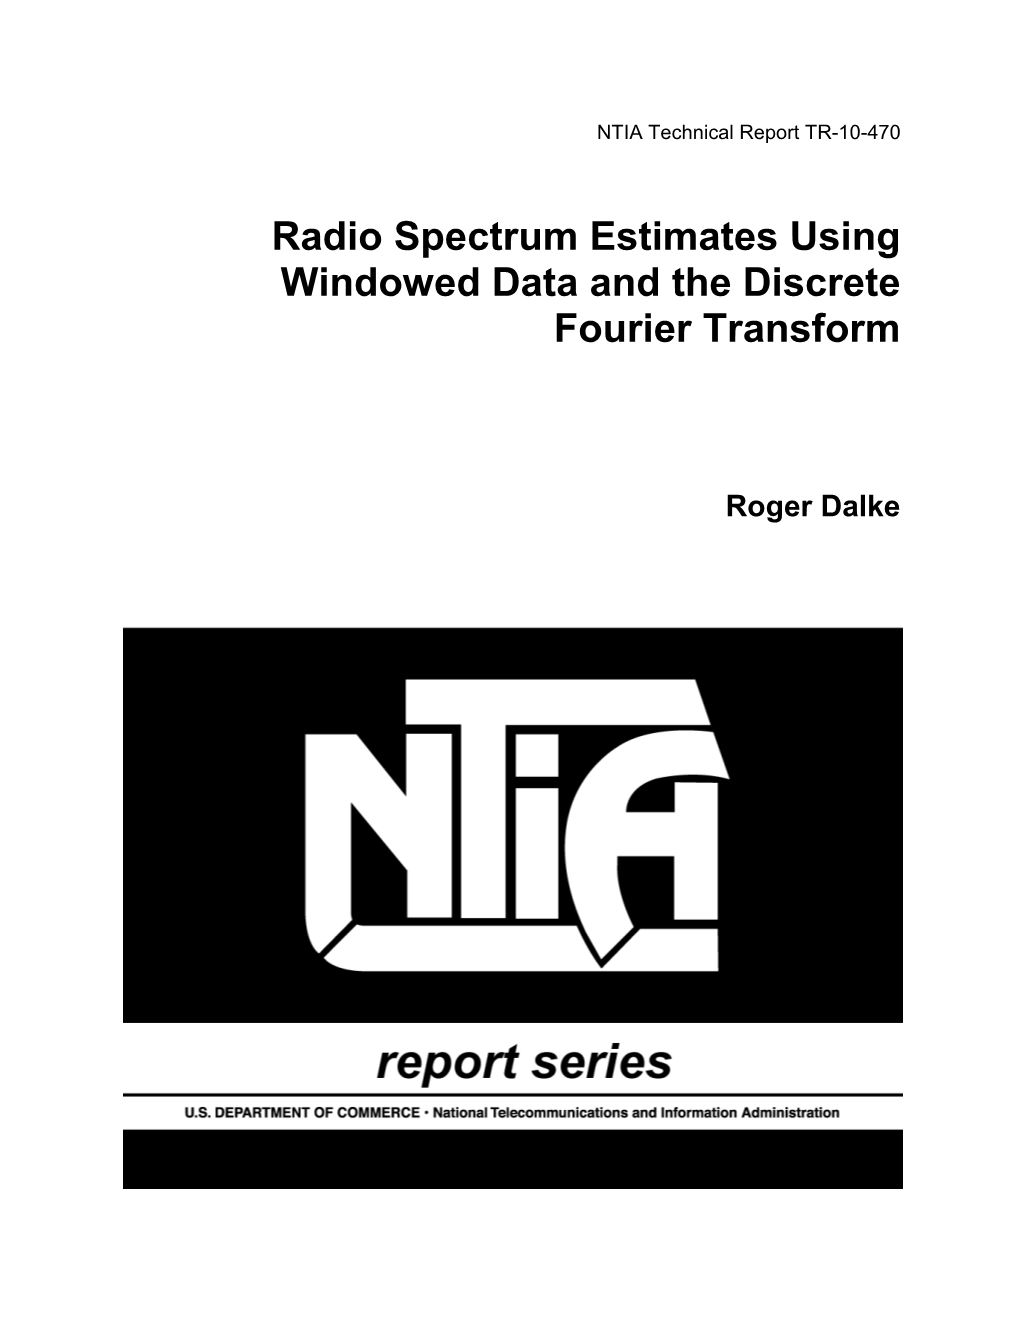 Radio Spectrum Estimates Using Windowed Data and the Discrete Fourier Transform